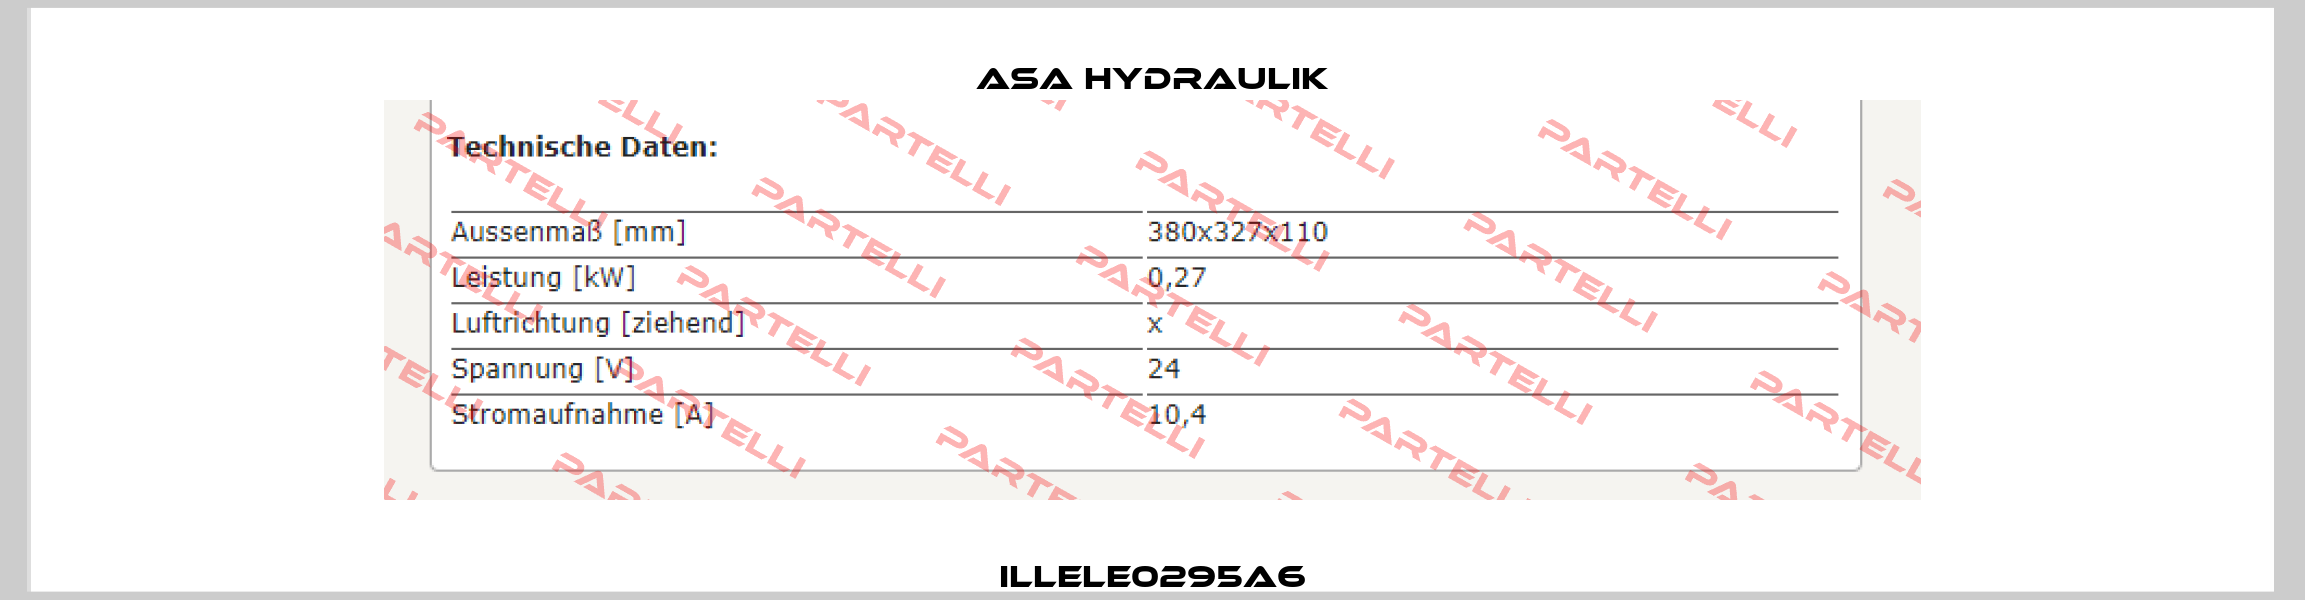 ILLELE0295A6 ASA Hydraulik